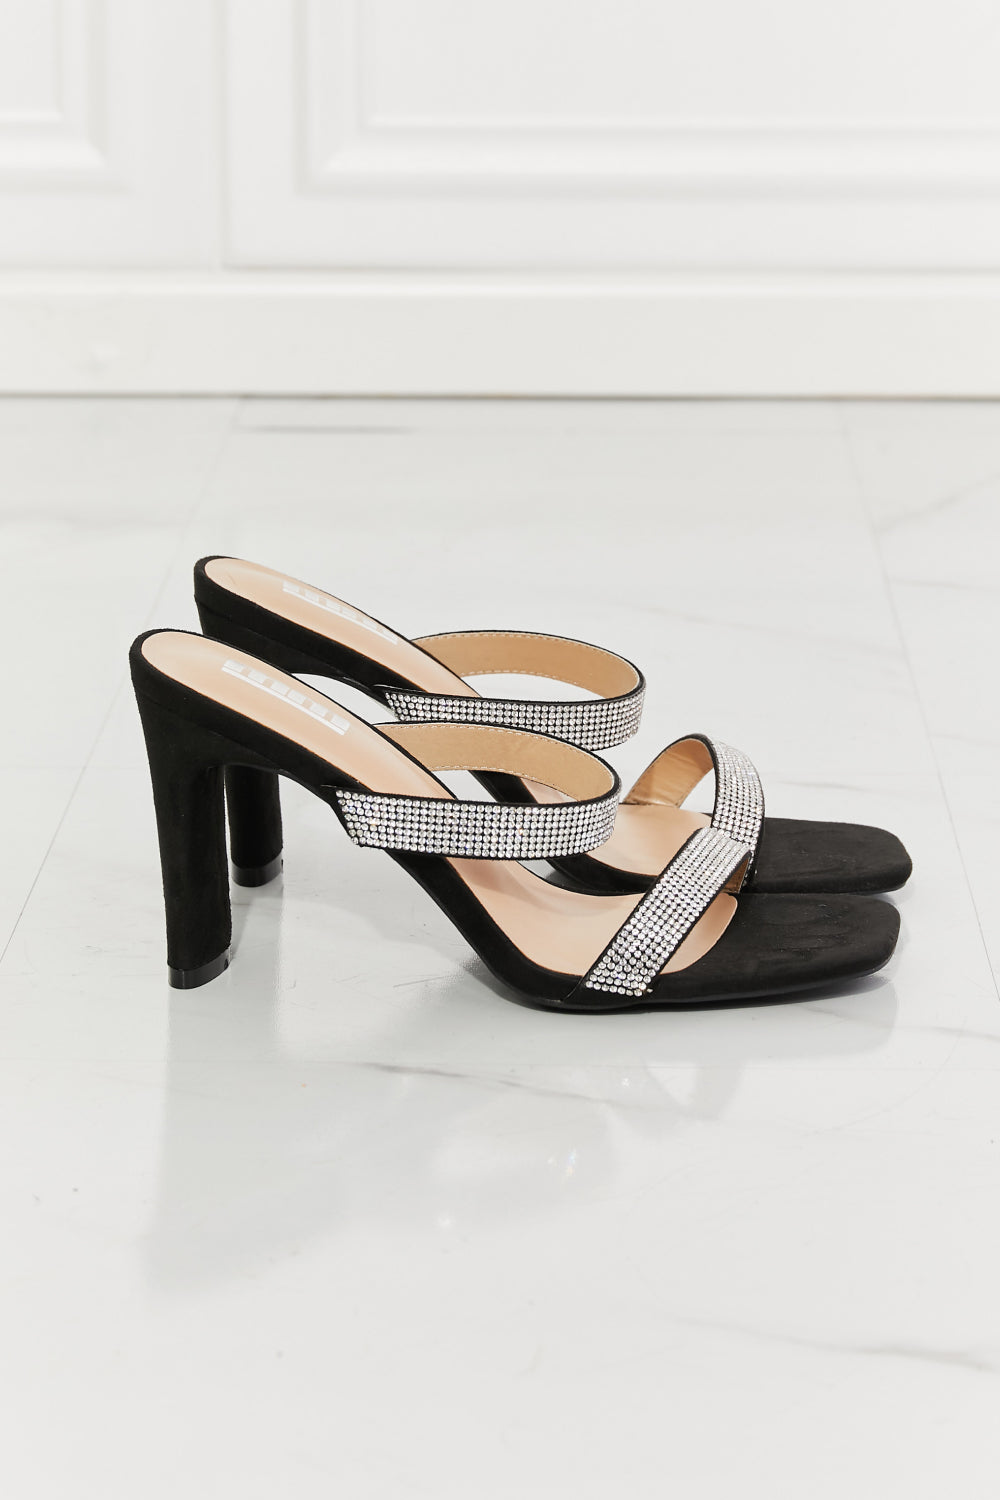 MMShoes Leave A Little Sparkle Rhinestone Block Heel Sandal in Black Trendsi